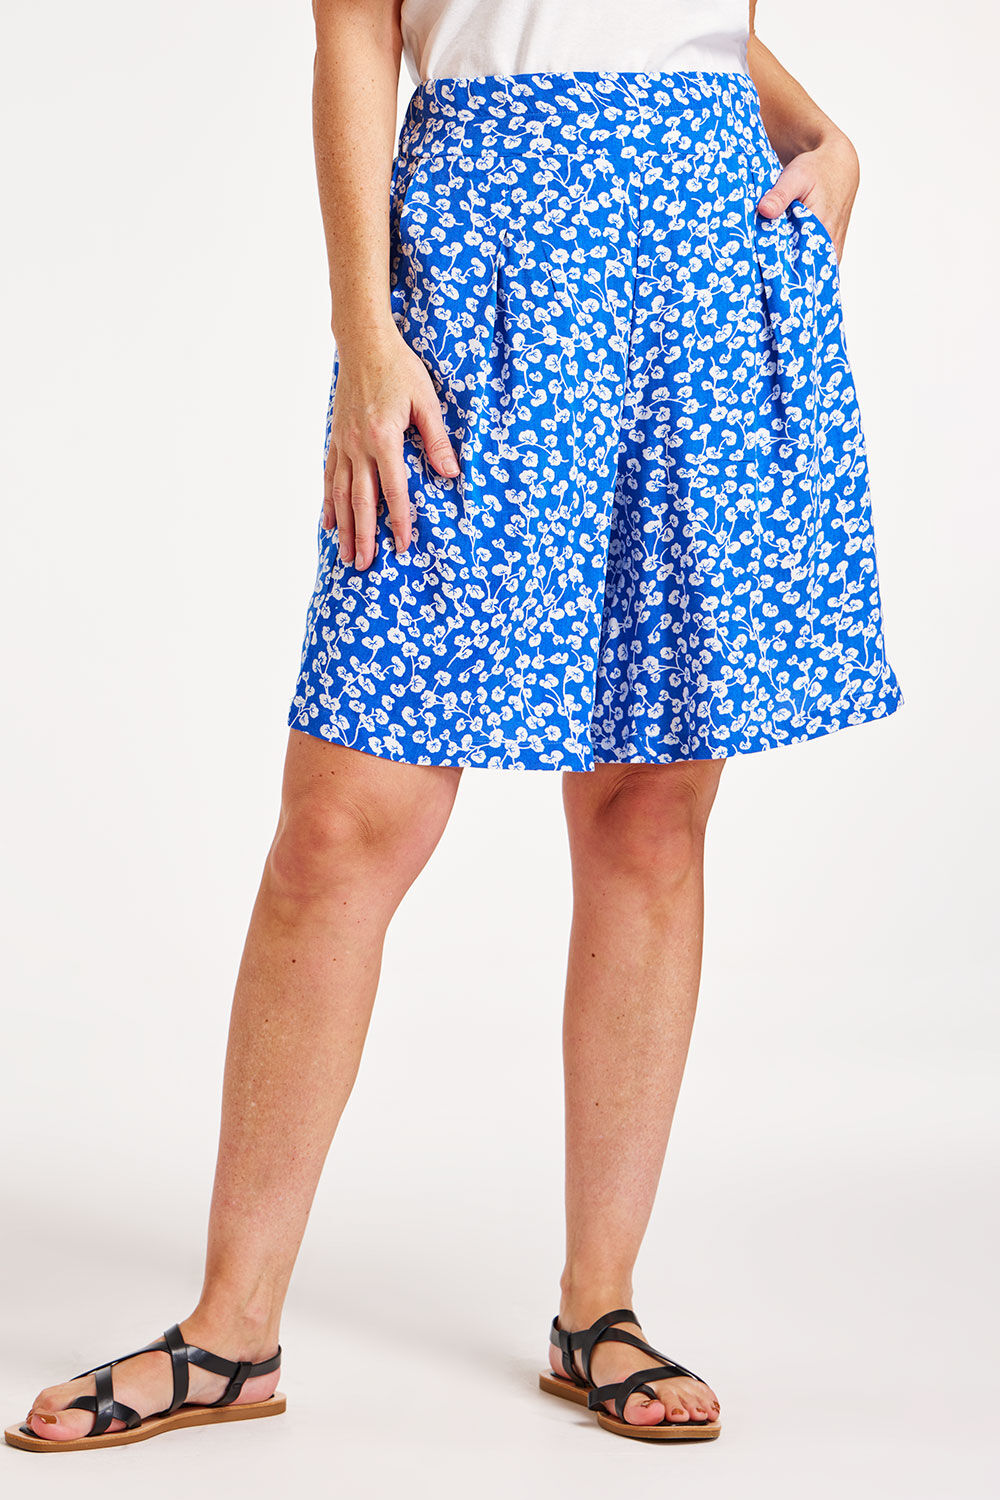 Bonmarche Bright Blue Floral Sprig Print Elasticated Shorts, Size: 10